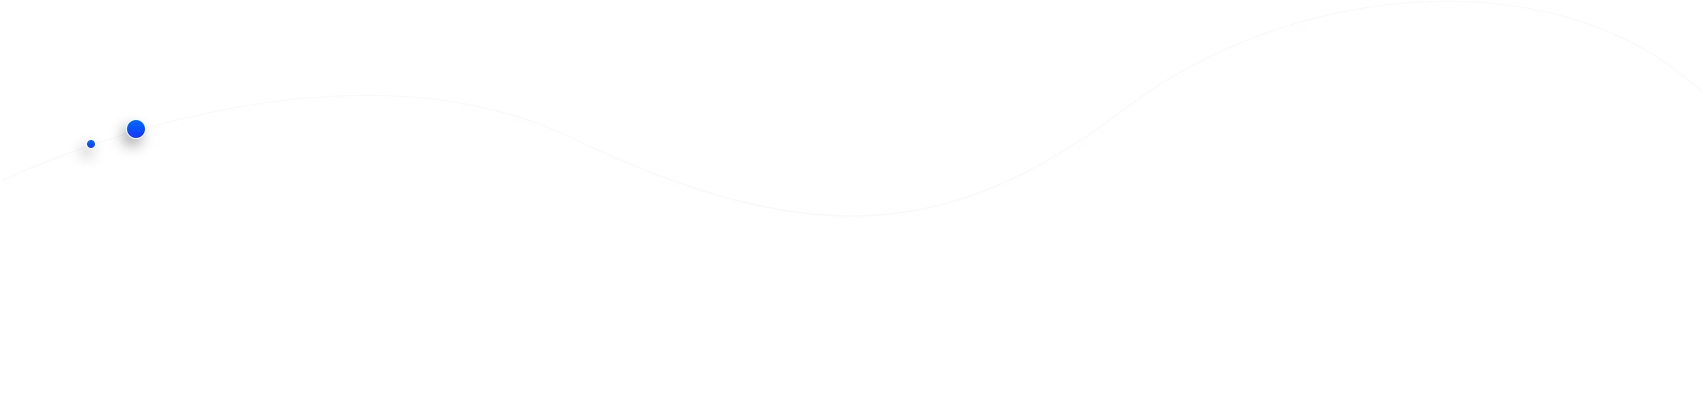 horizontal shape